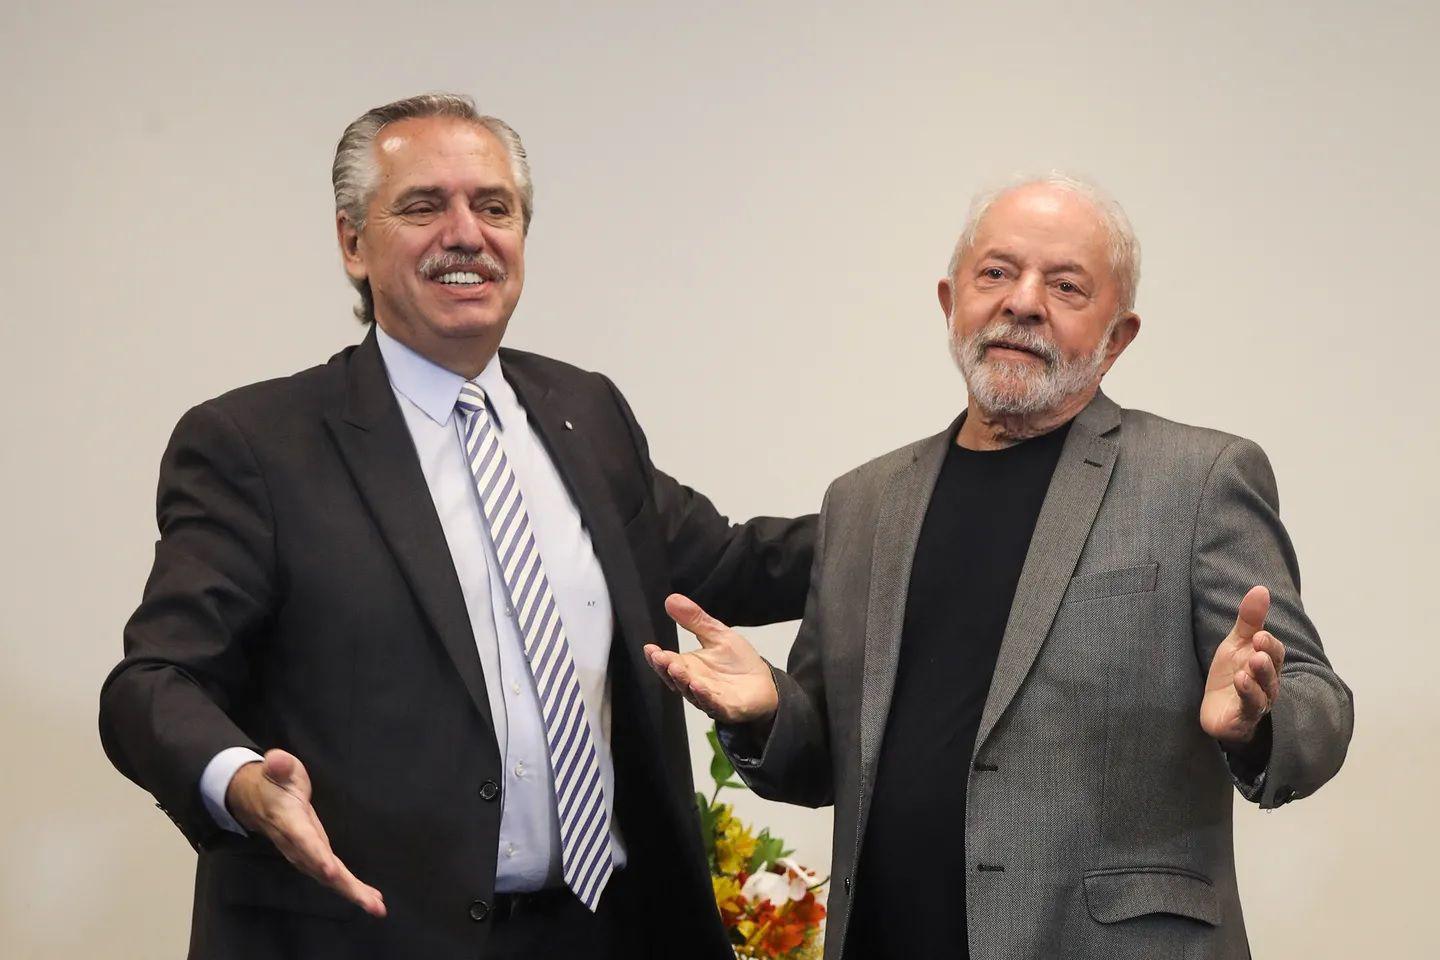 El kirchnerismo se desespera por sacarse fotos con Lula pero no por aprender de eacutel